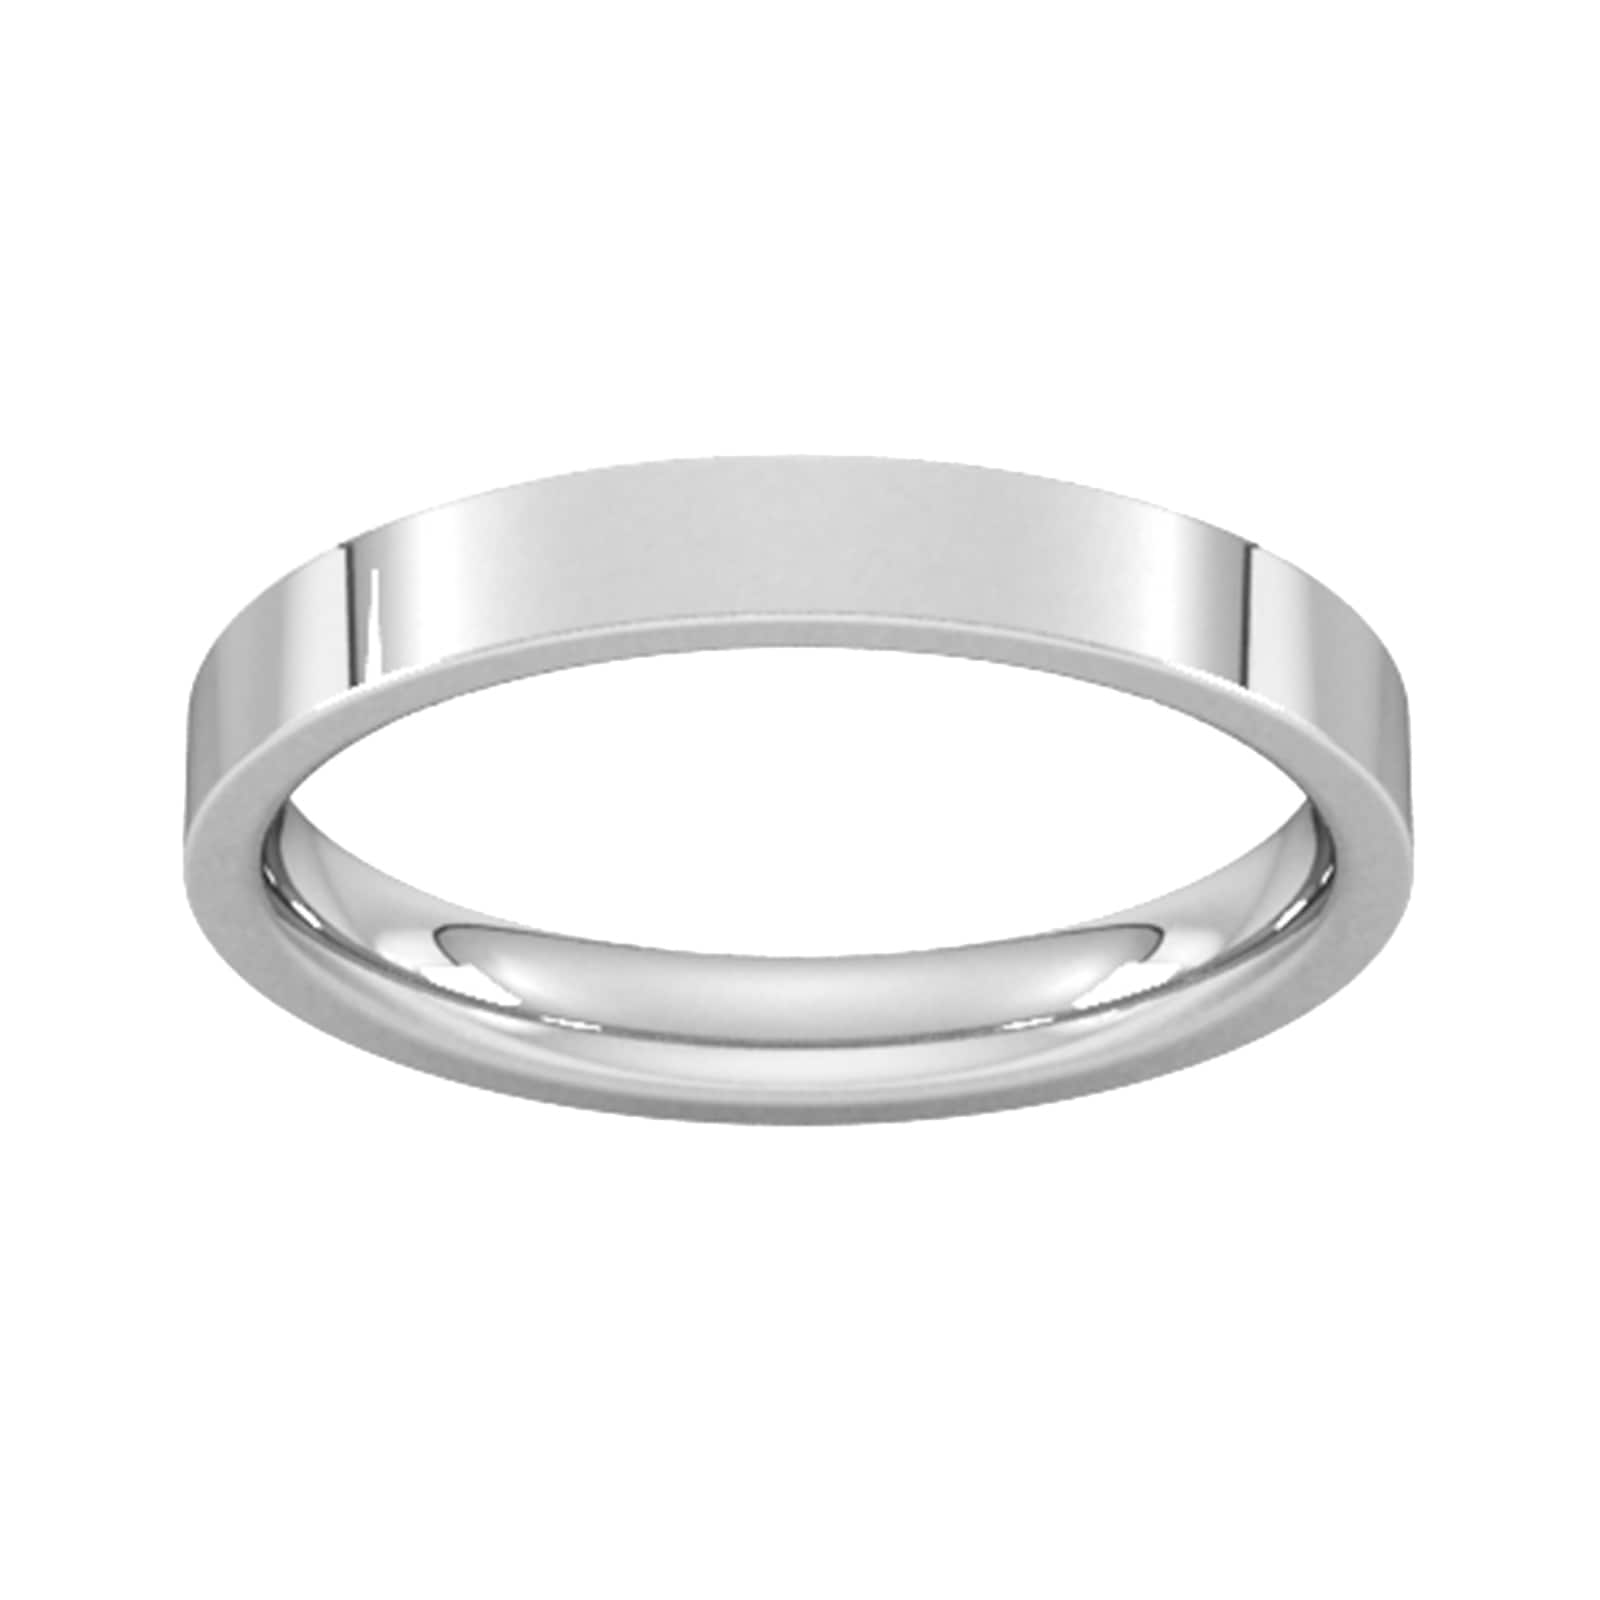 3mm Flat Court Heavy Wedding Ring In 950 Palladium - Ring Size S